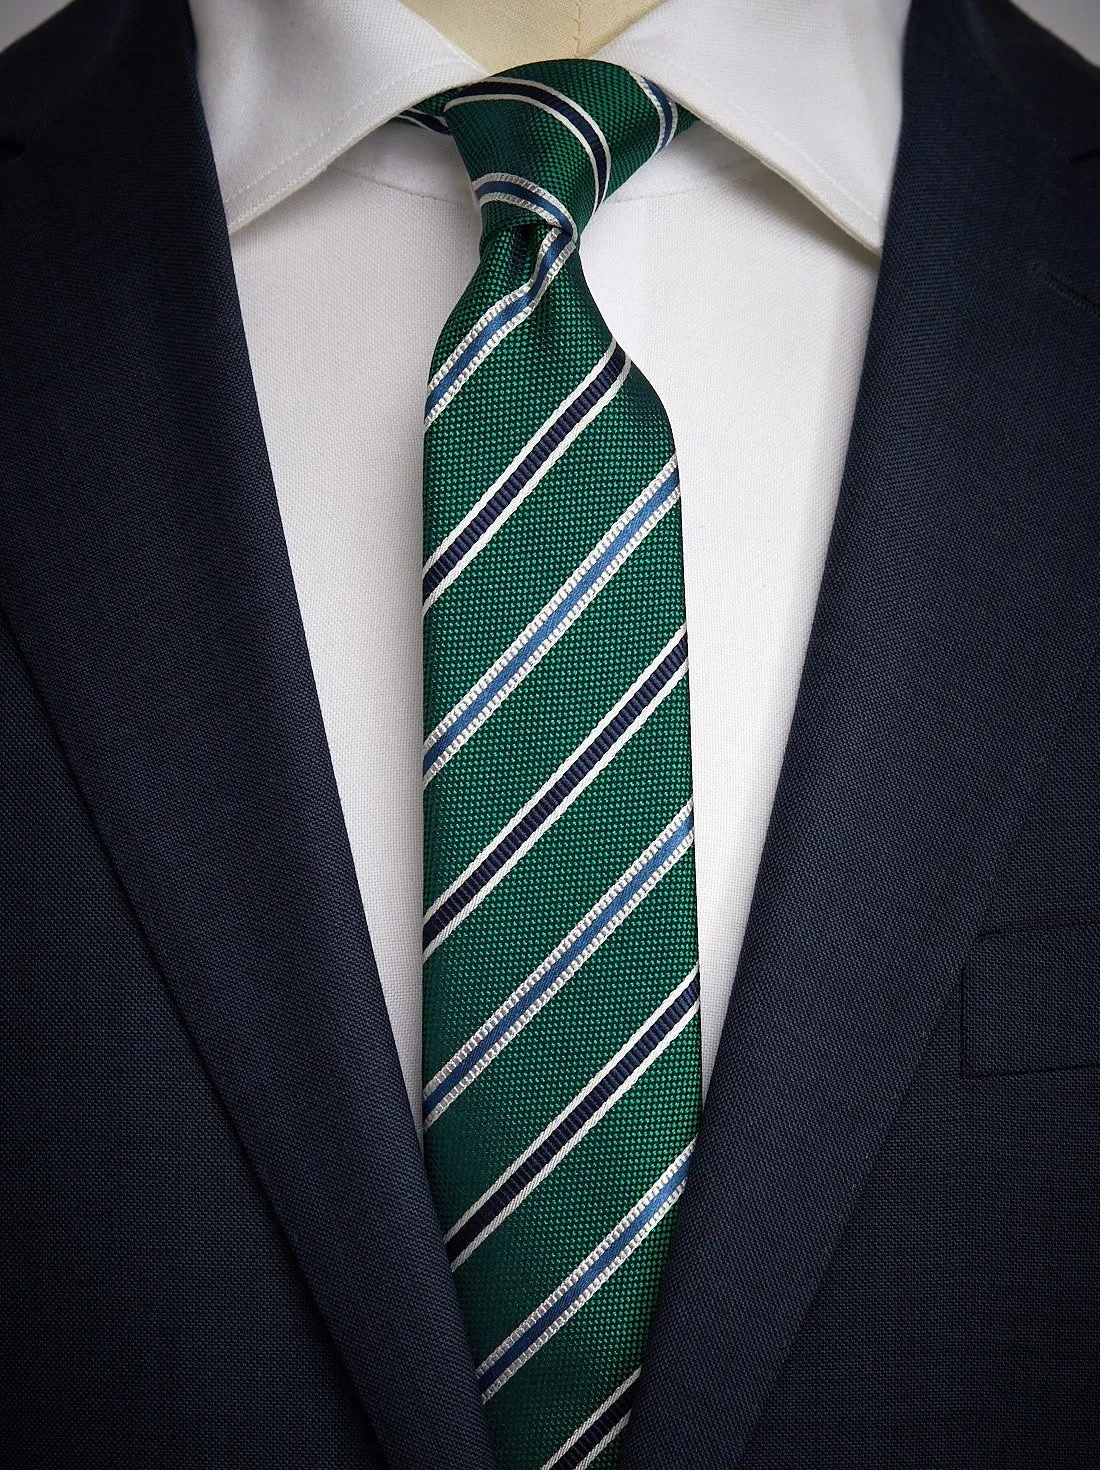 Green & Blue Tie Striped